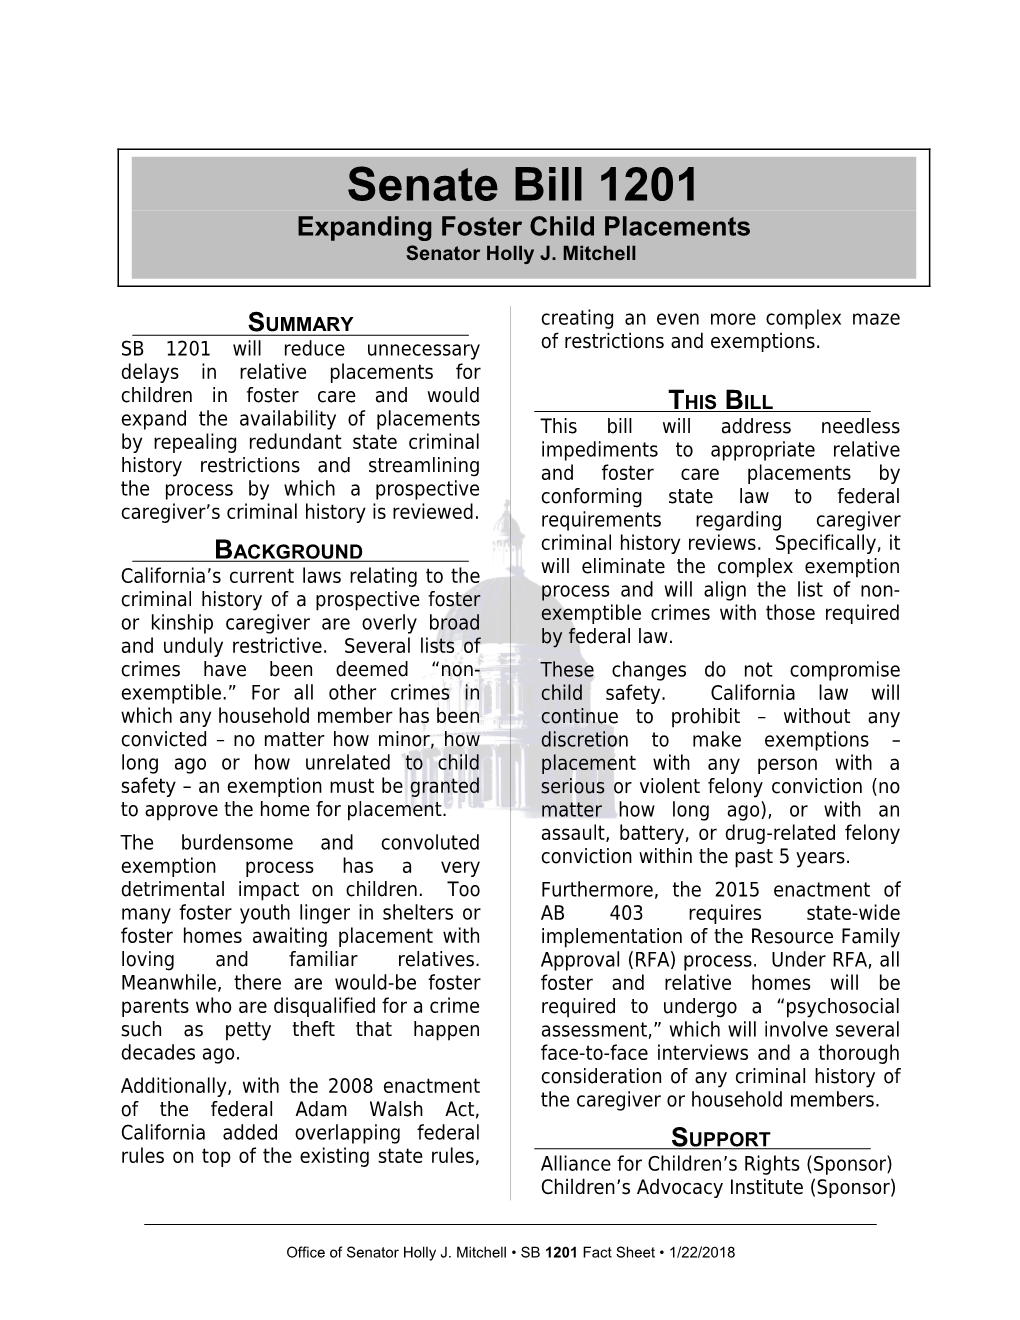 Office of Senator Holly J. Mitchell SB 1201 Fact Sheet 2/18/2016